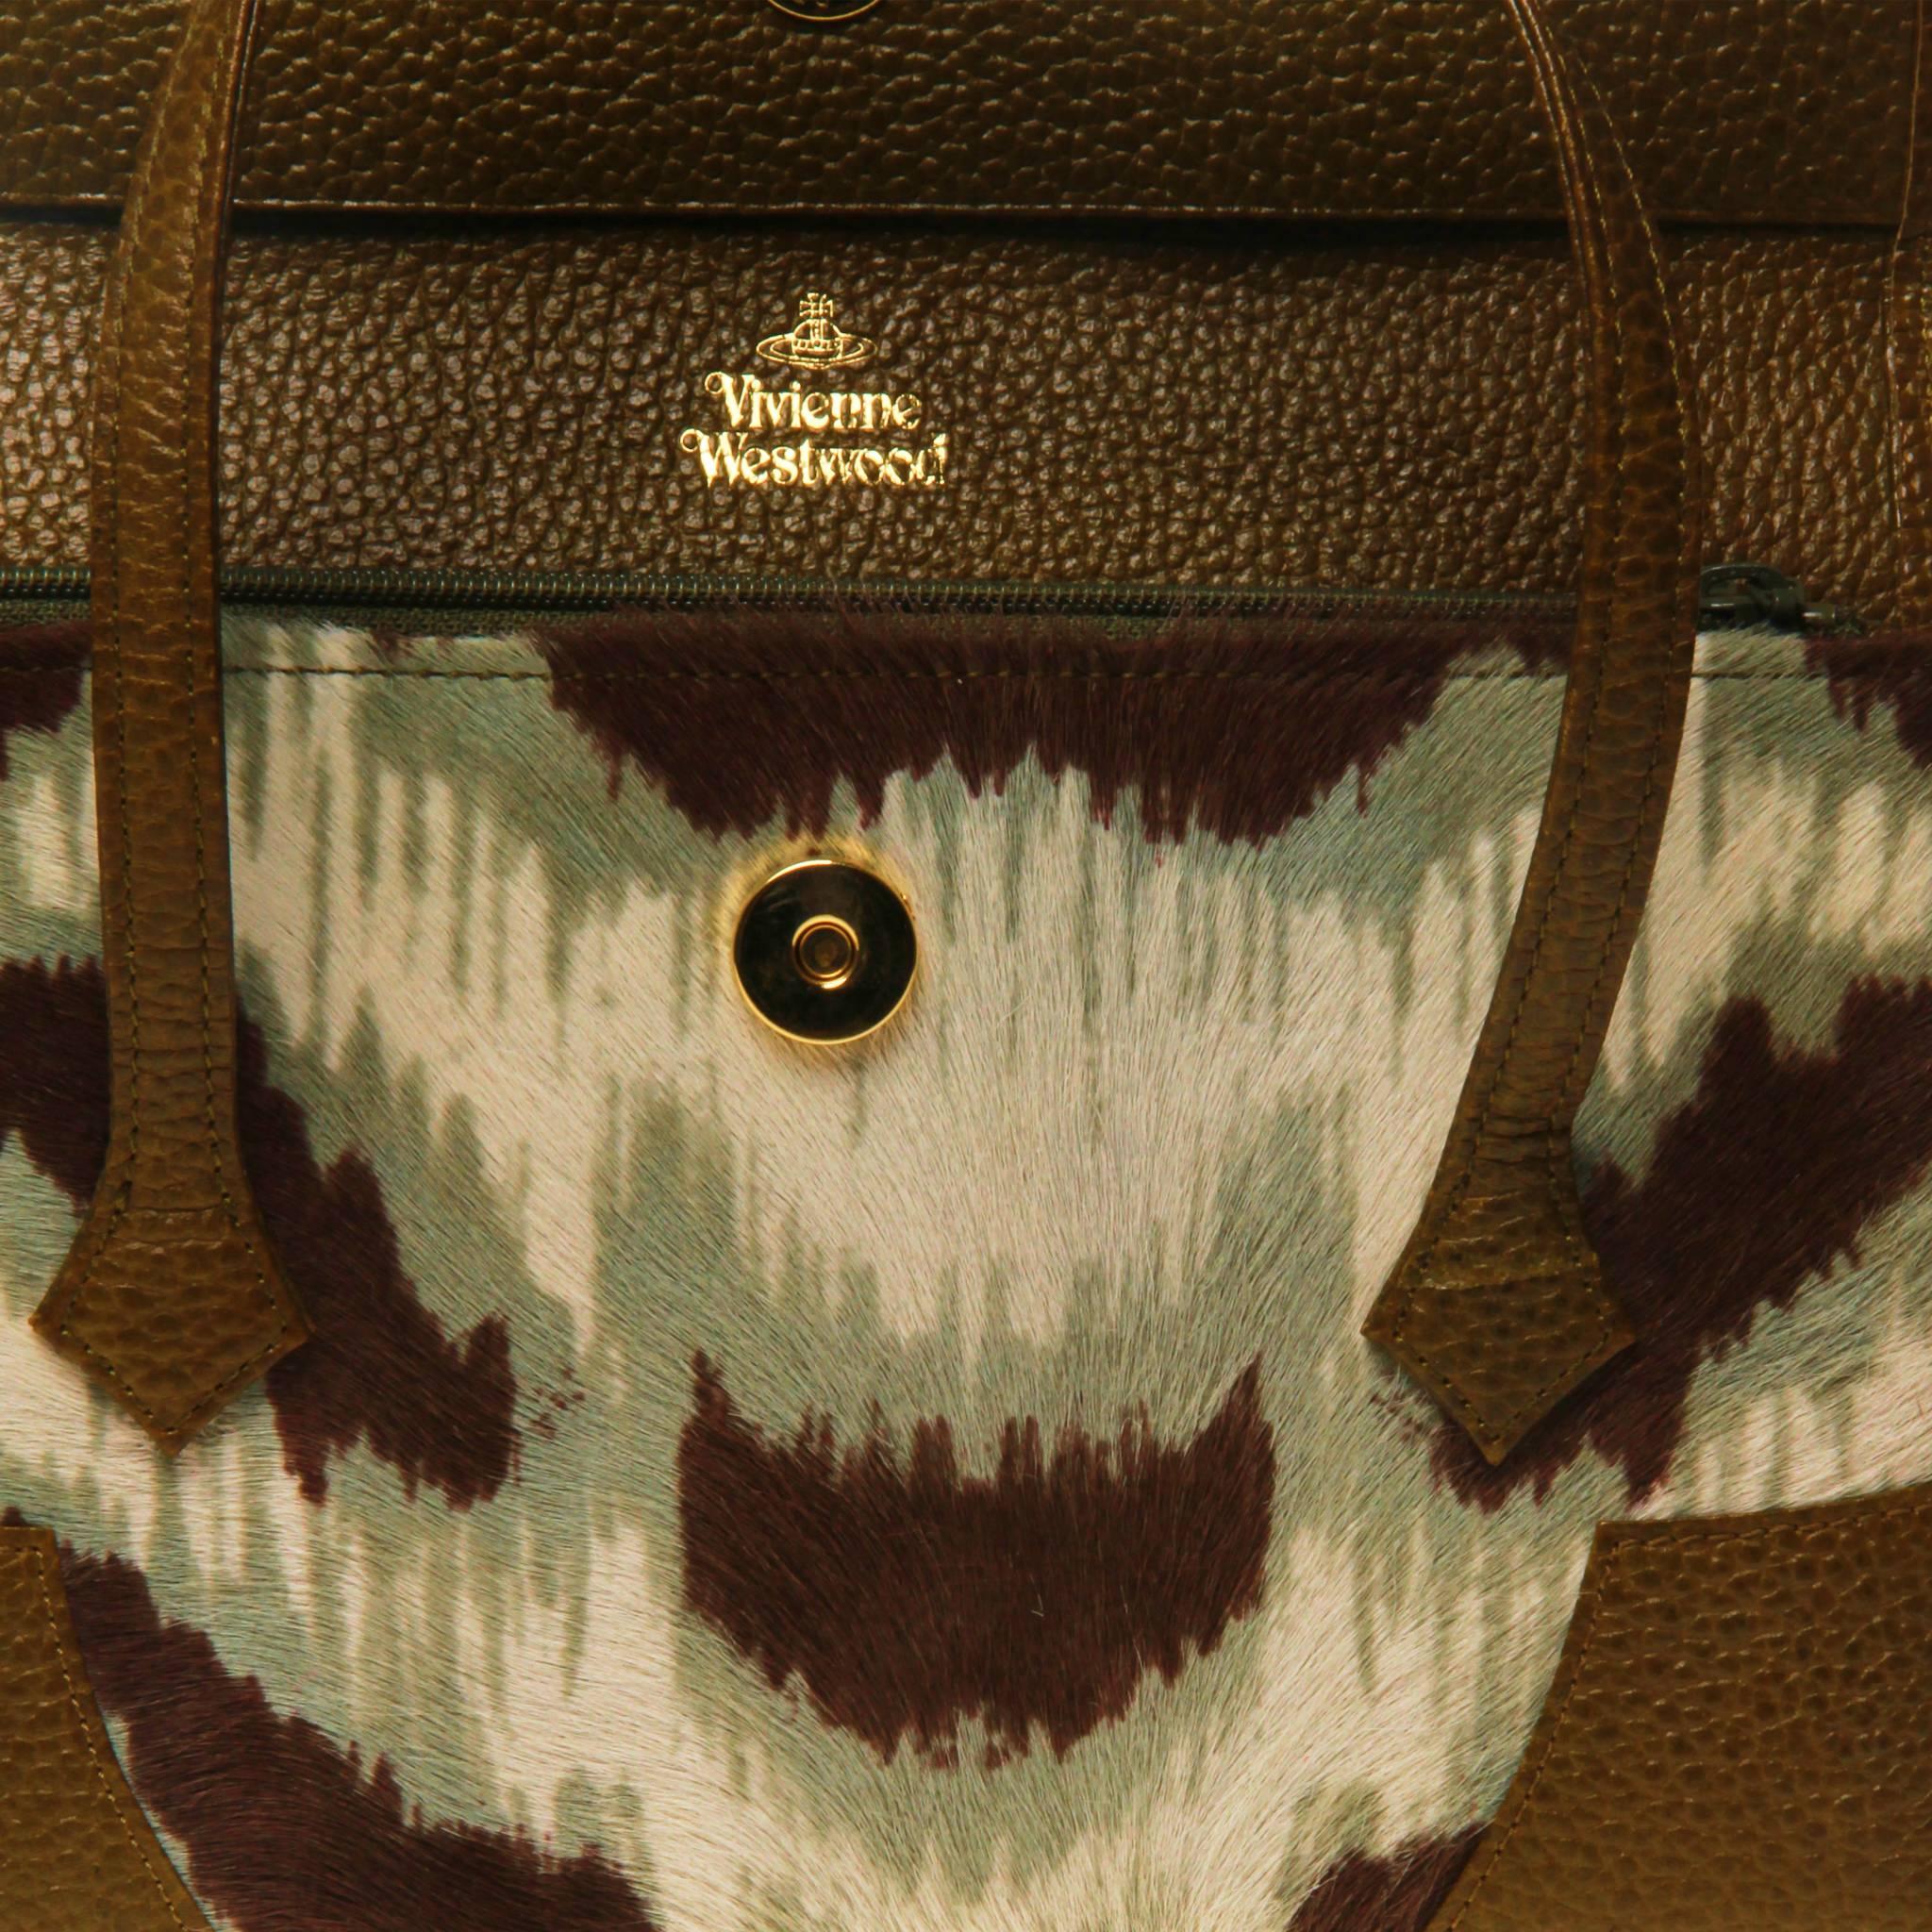 Vivienne Westwood Ponyhair Wallet Handbag In Good Condition In Melbourne, Victoria